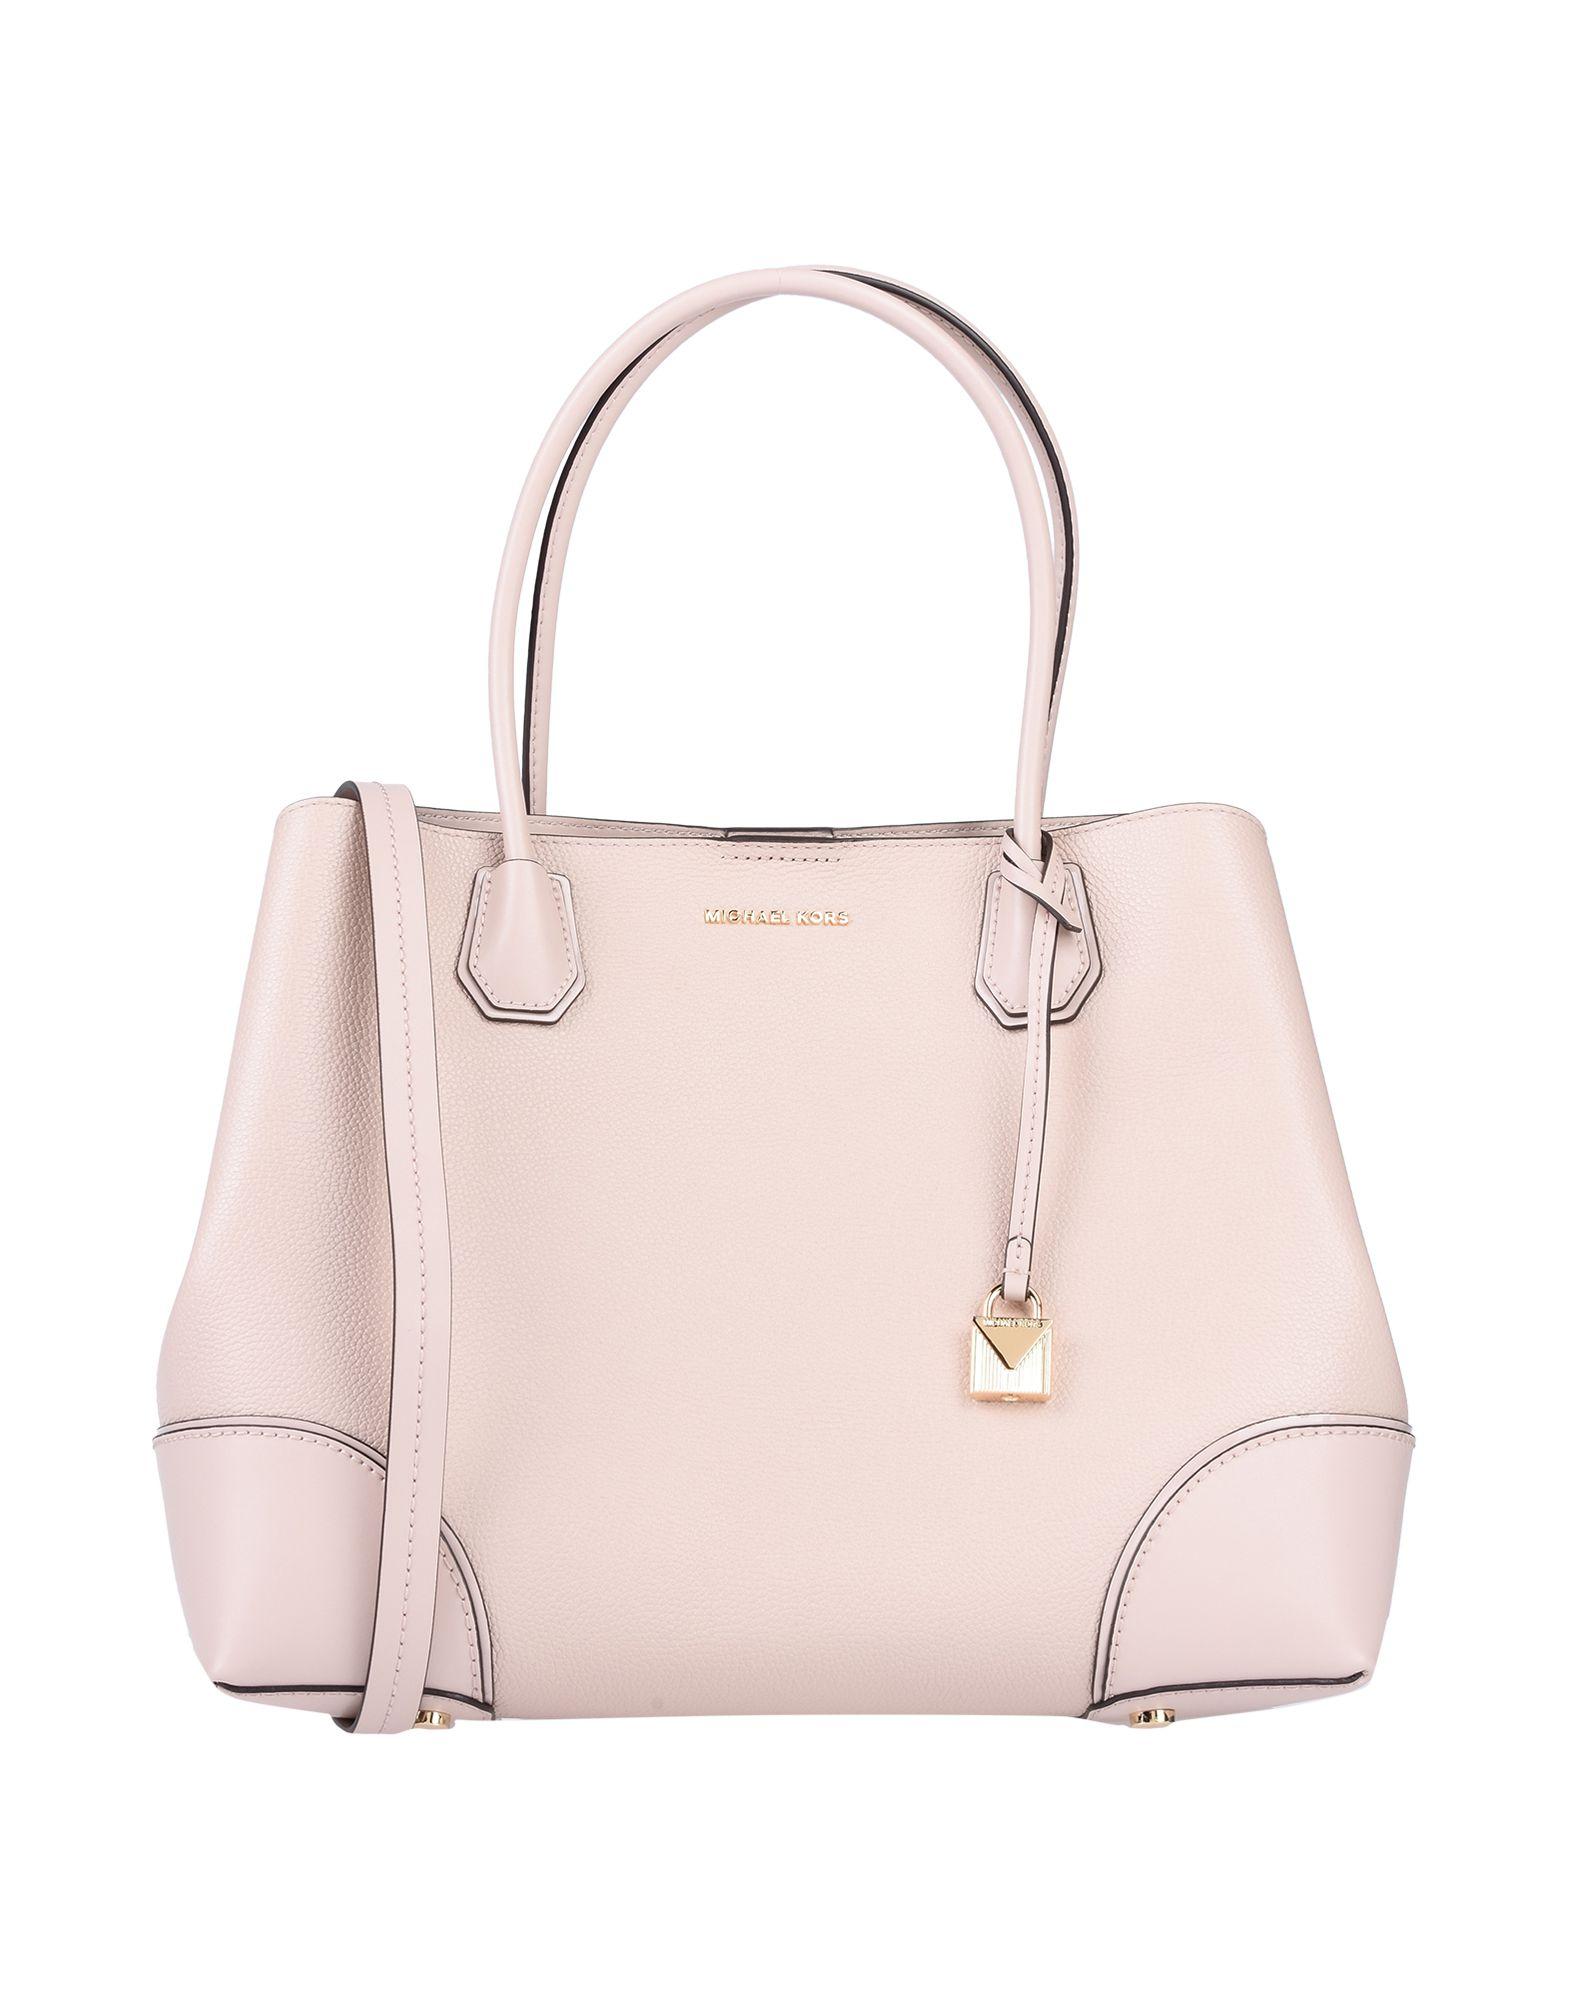 MICHAEL Michael Kors Leather Handbag in Light Pink (Pink) - Lyst